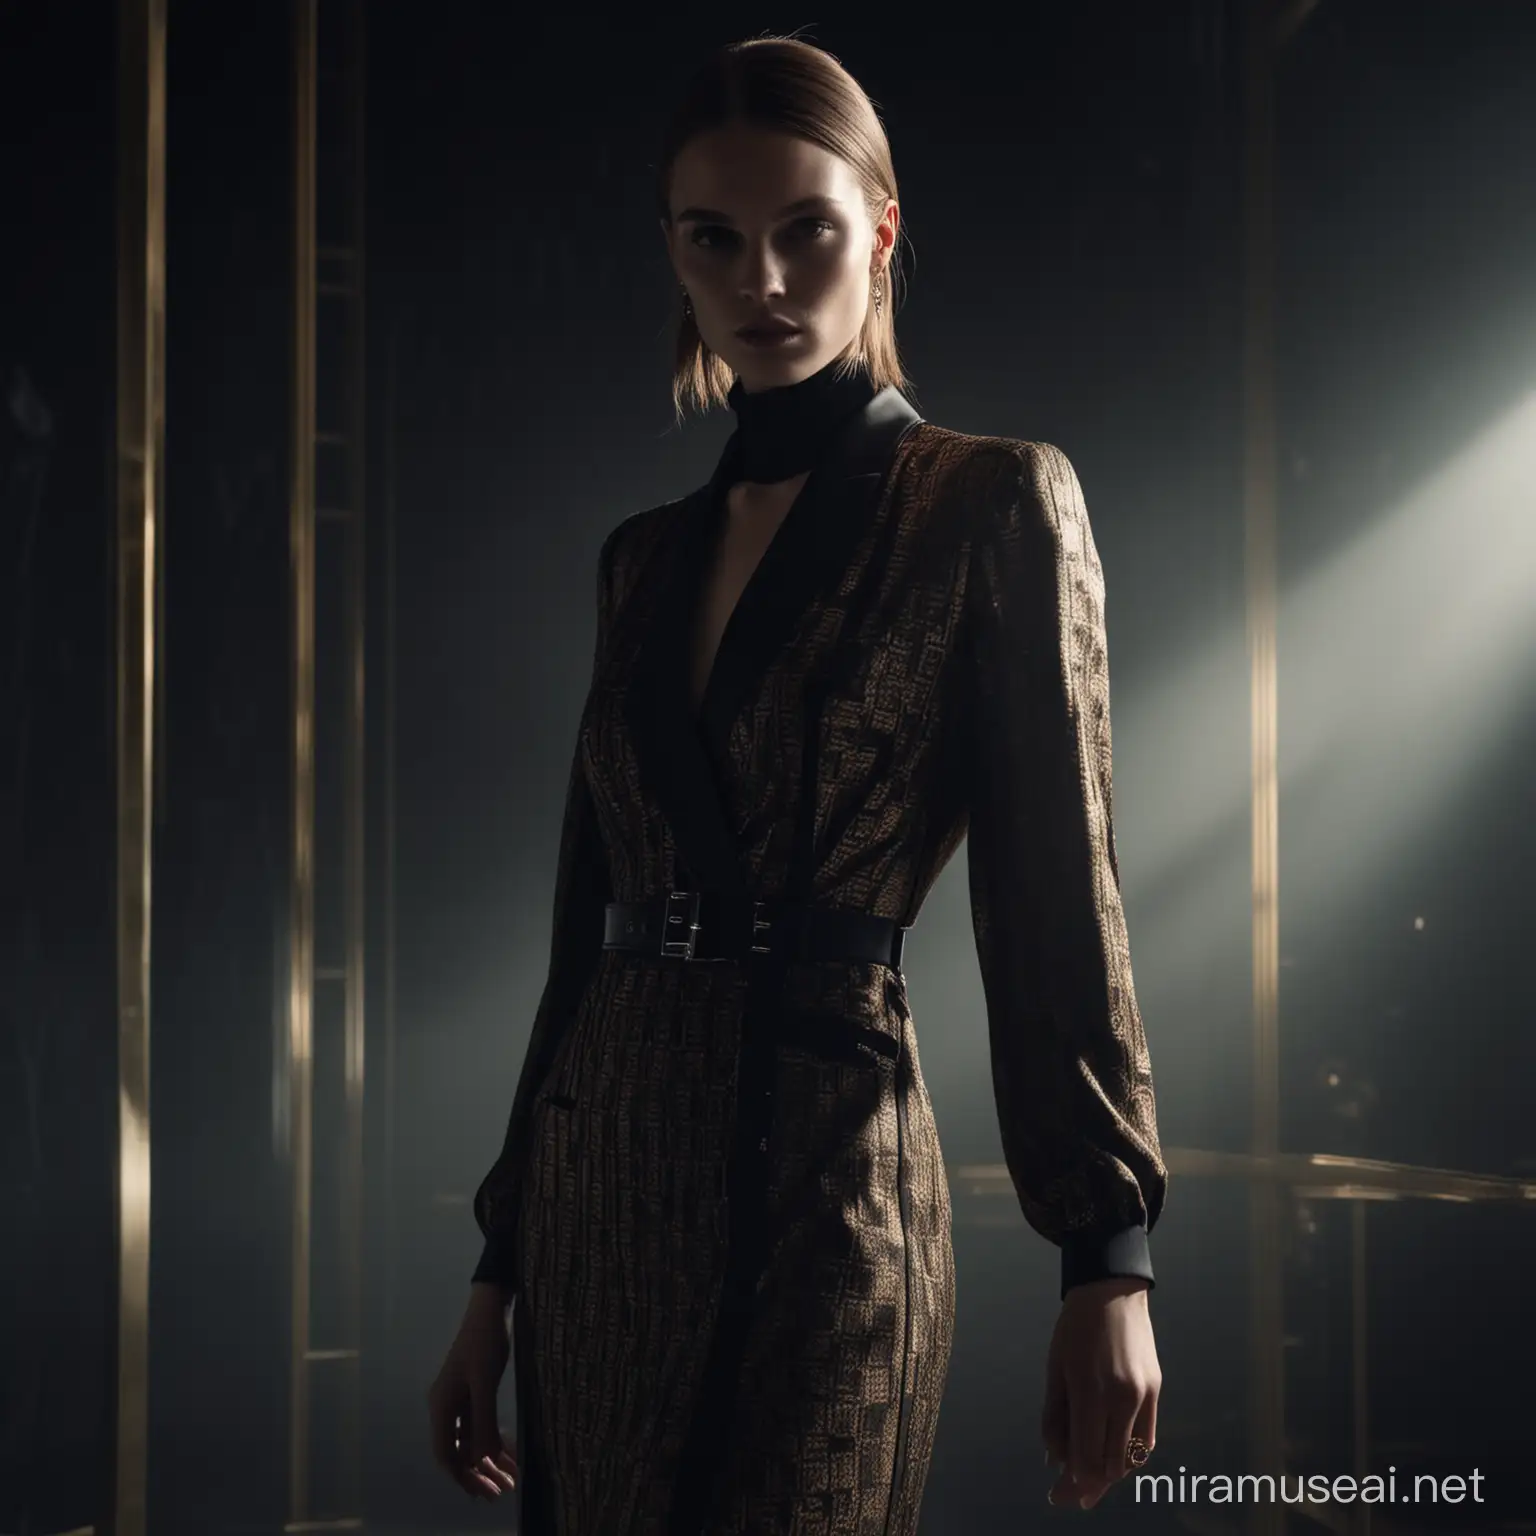 Gucci Vogue Ukraine Campaign Elegant Fashion Model Poses in Modern Dress